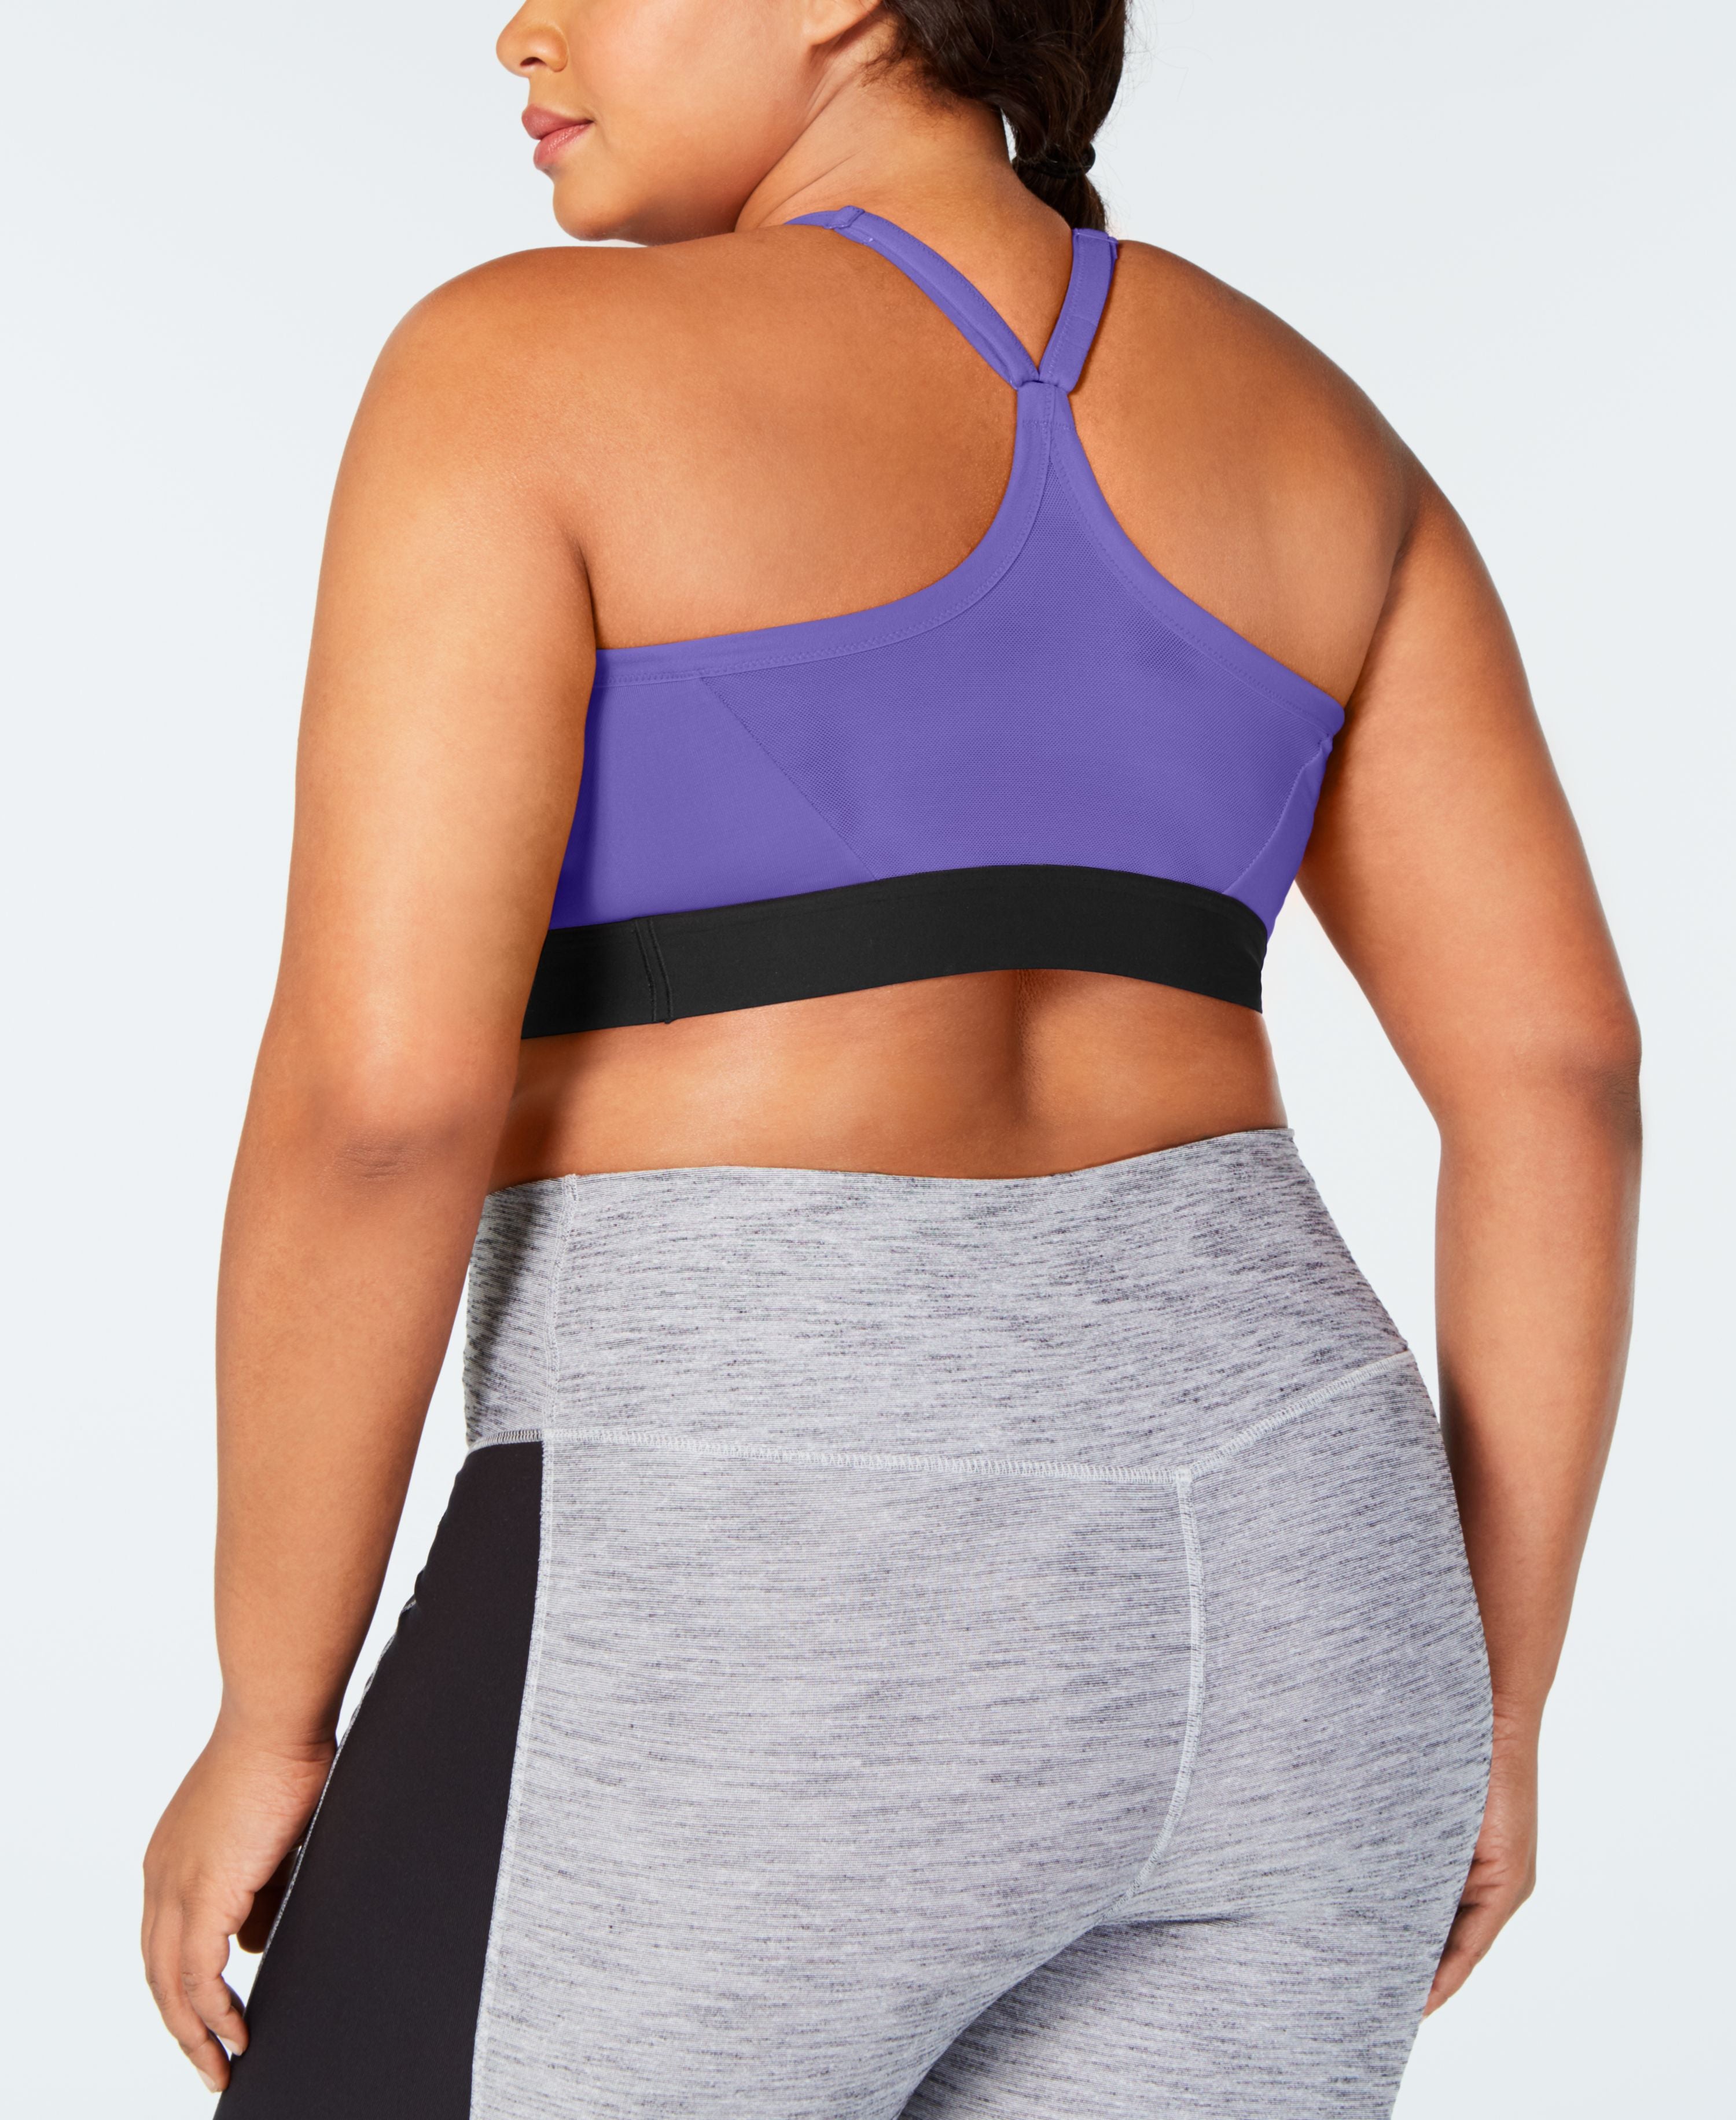 Nike Womens Plus Size Dri Fit Low Impact Sports Bra